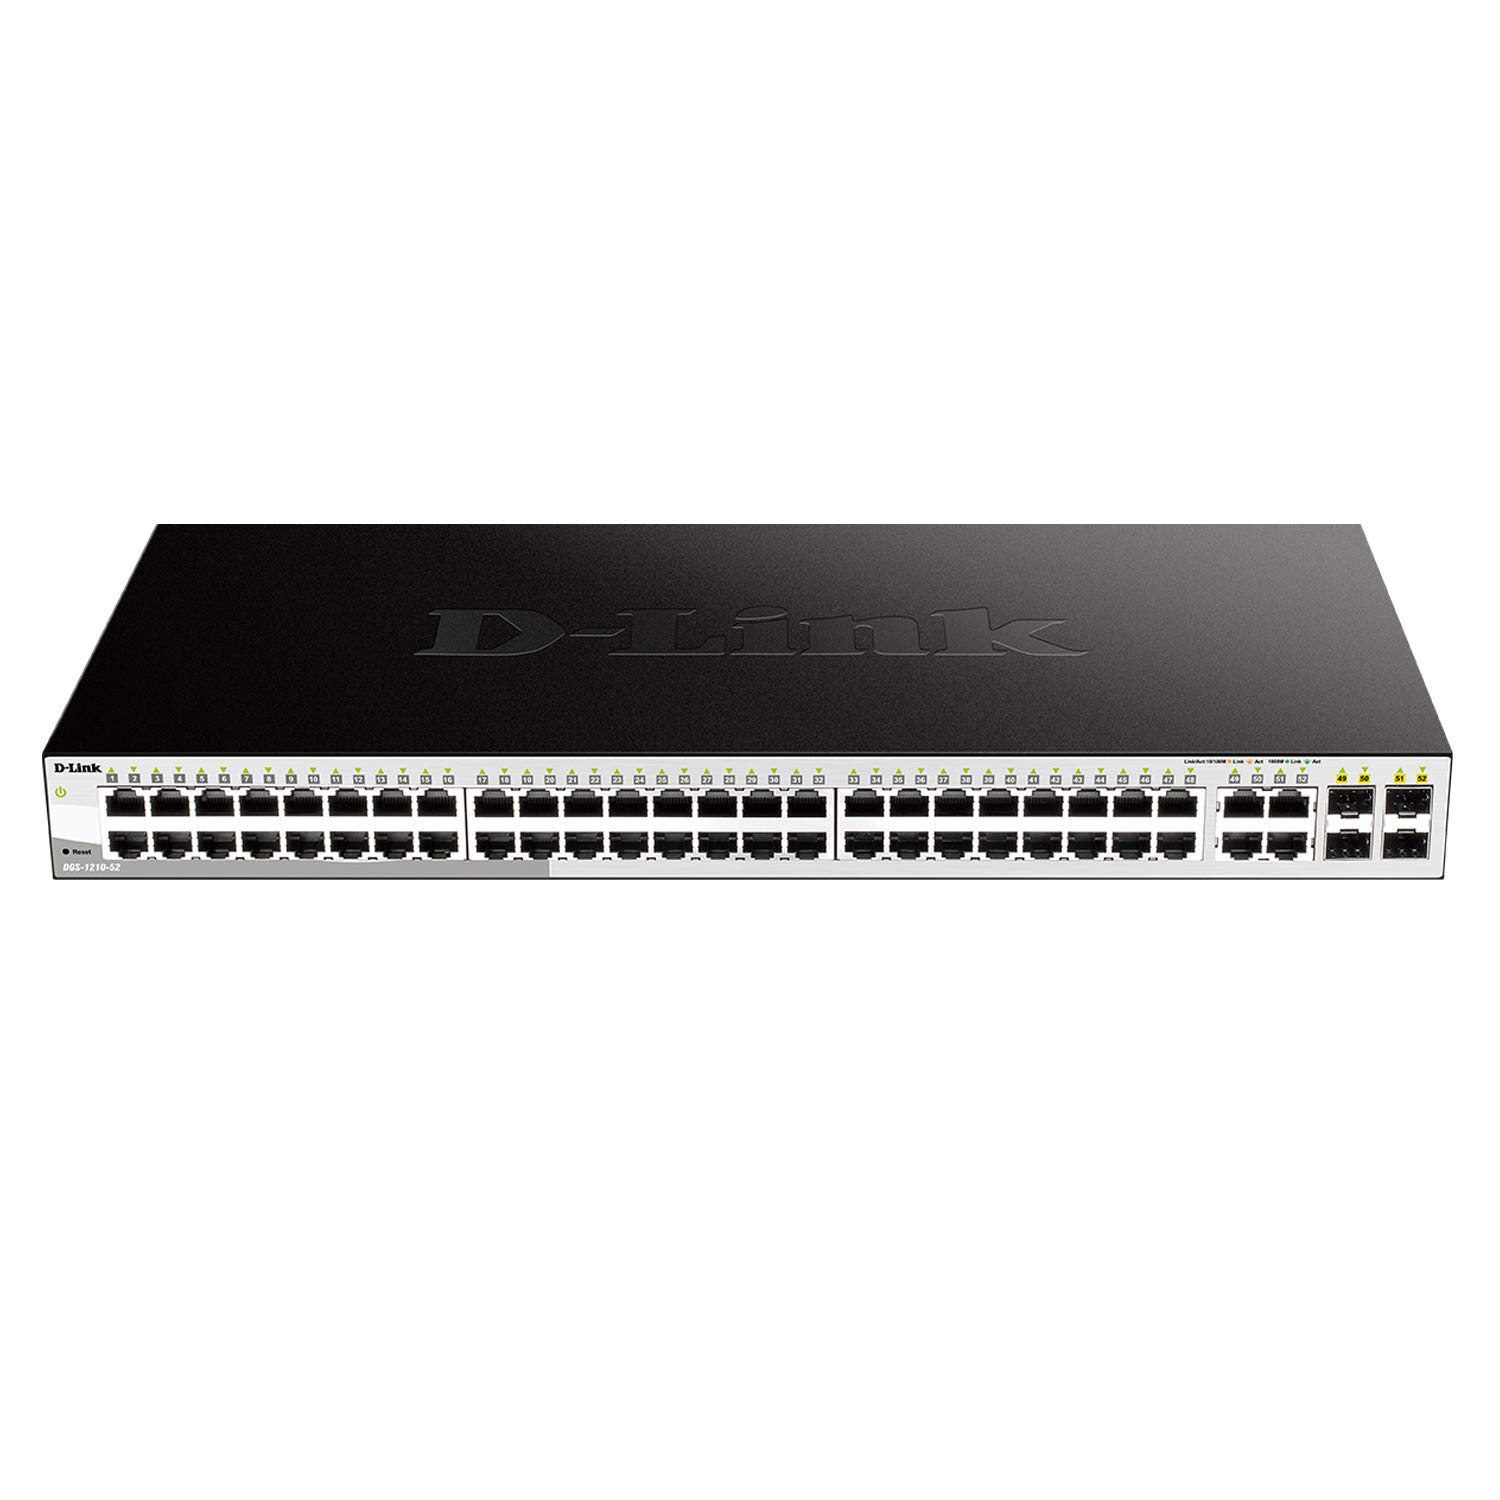 D-Link Ethernet Switch, 48 52 Port Smart Managed Layer 2+ Gigabit with 4 Gigabit RJ45/SFP COMBO Ports (DGS-1210-52)